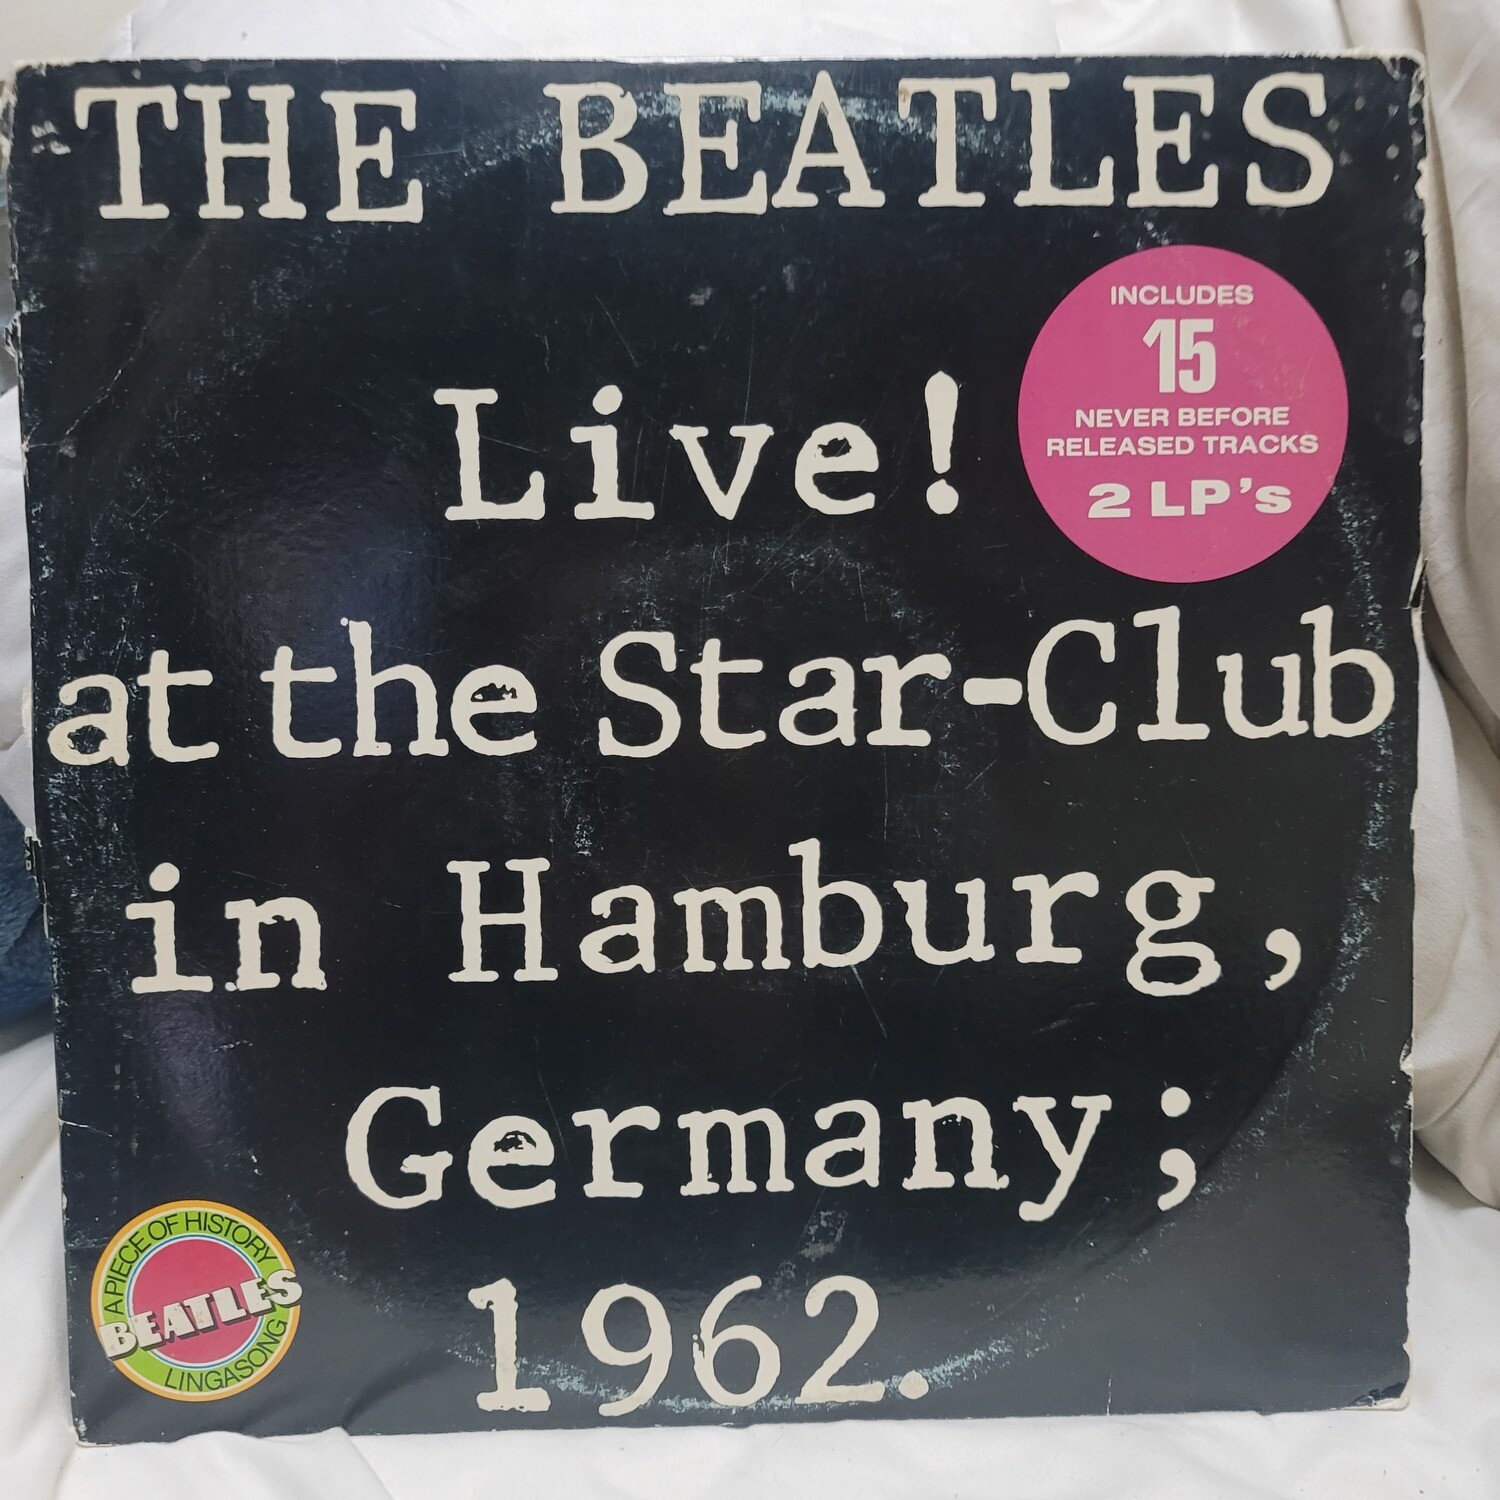 The Beatles Live in Hamburg, Germany [1962]